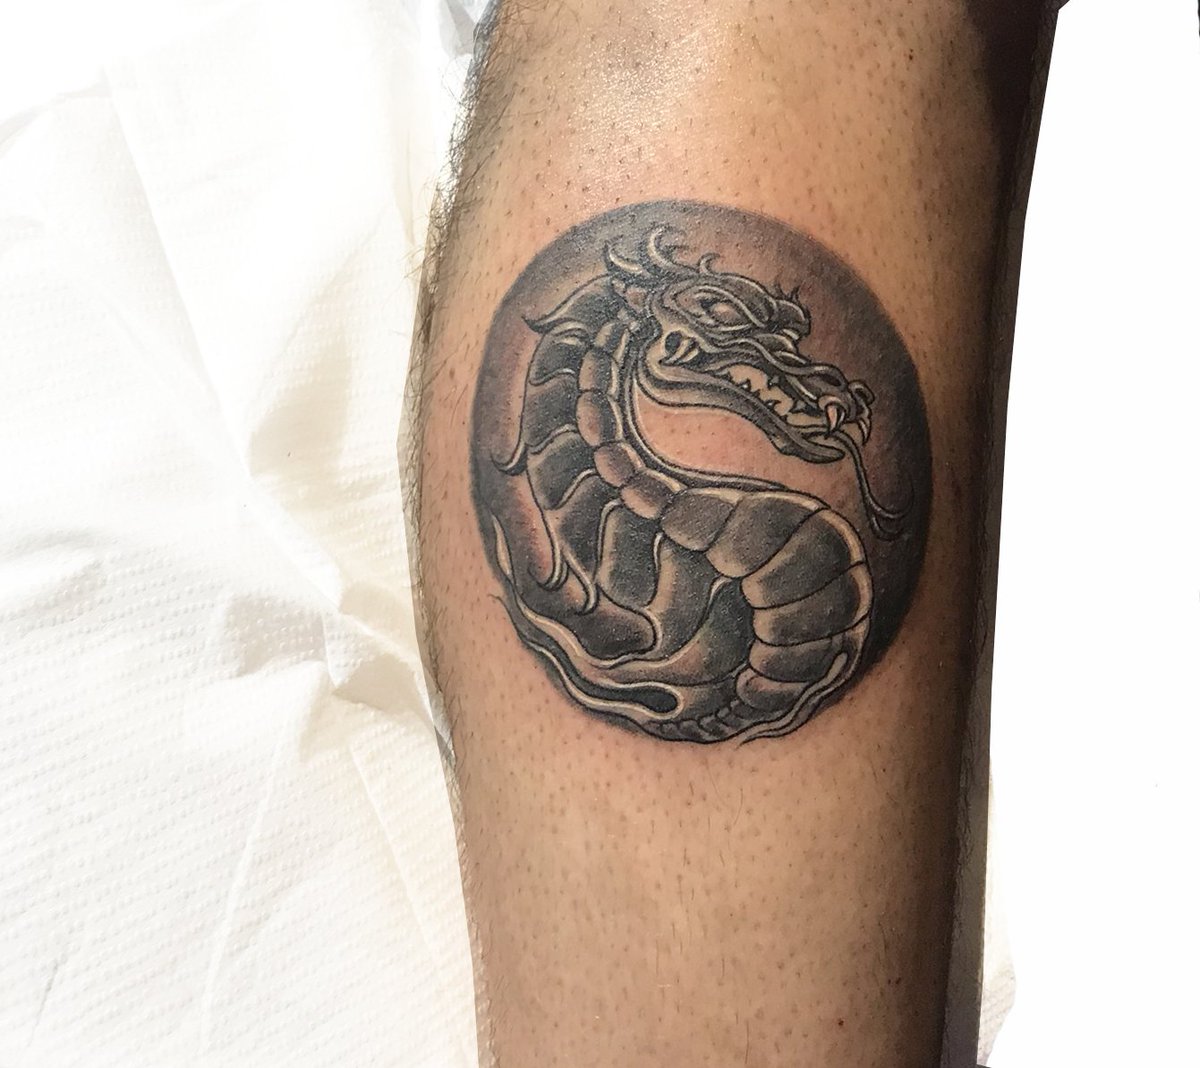 Mortal Kombat Tattoo for a friend by InkConcept on DeviantArt